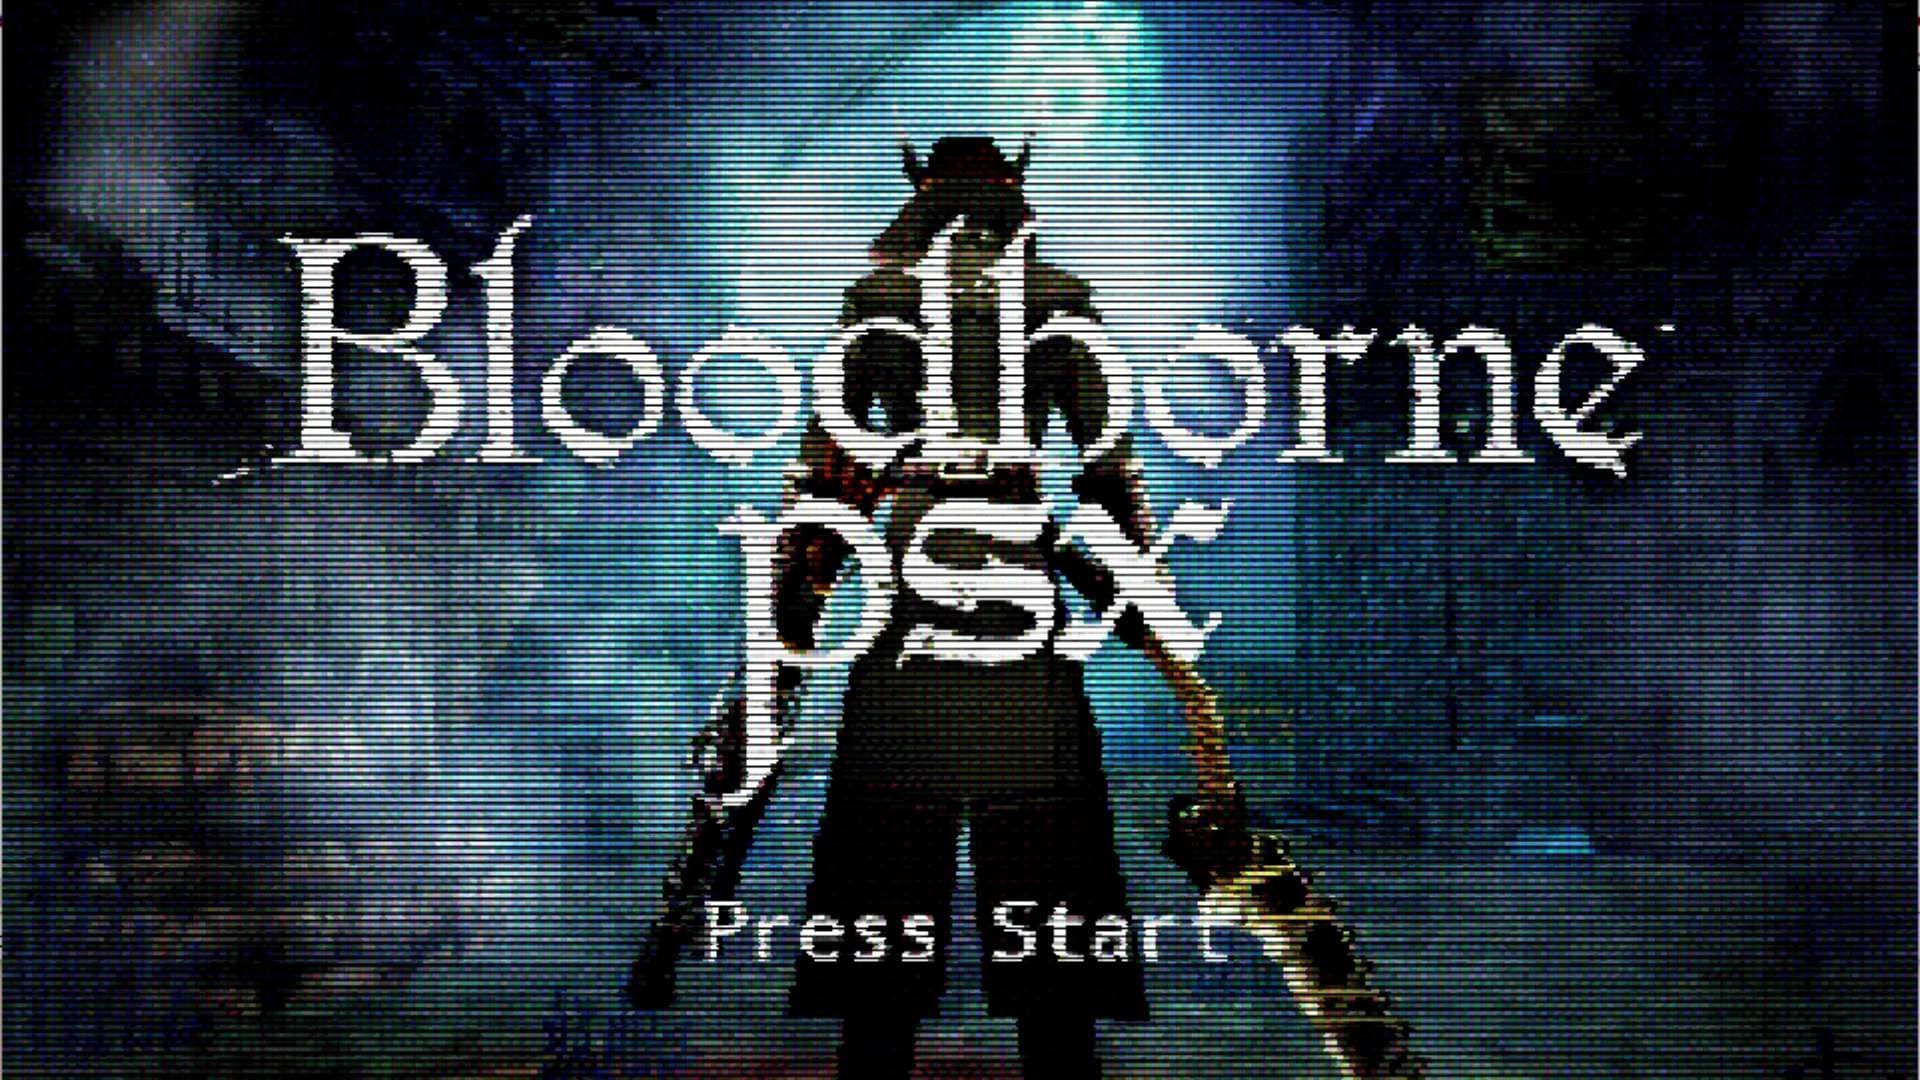 Bloodborne PSX  The Noble Demon